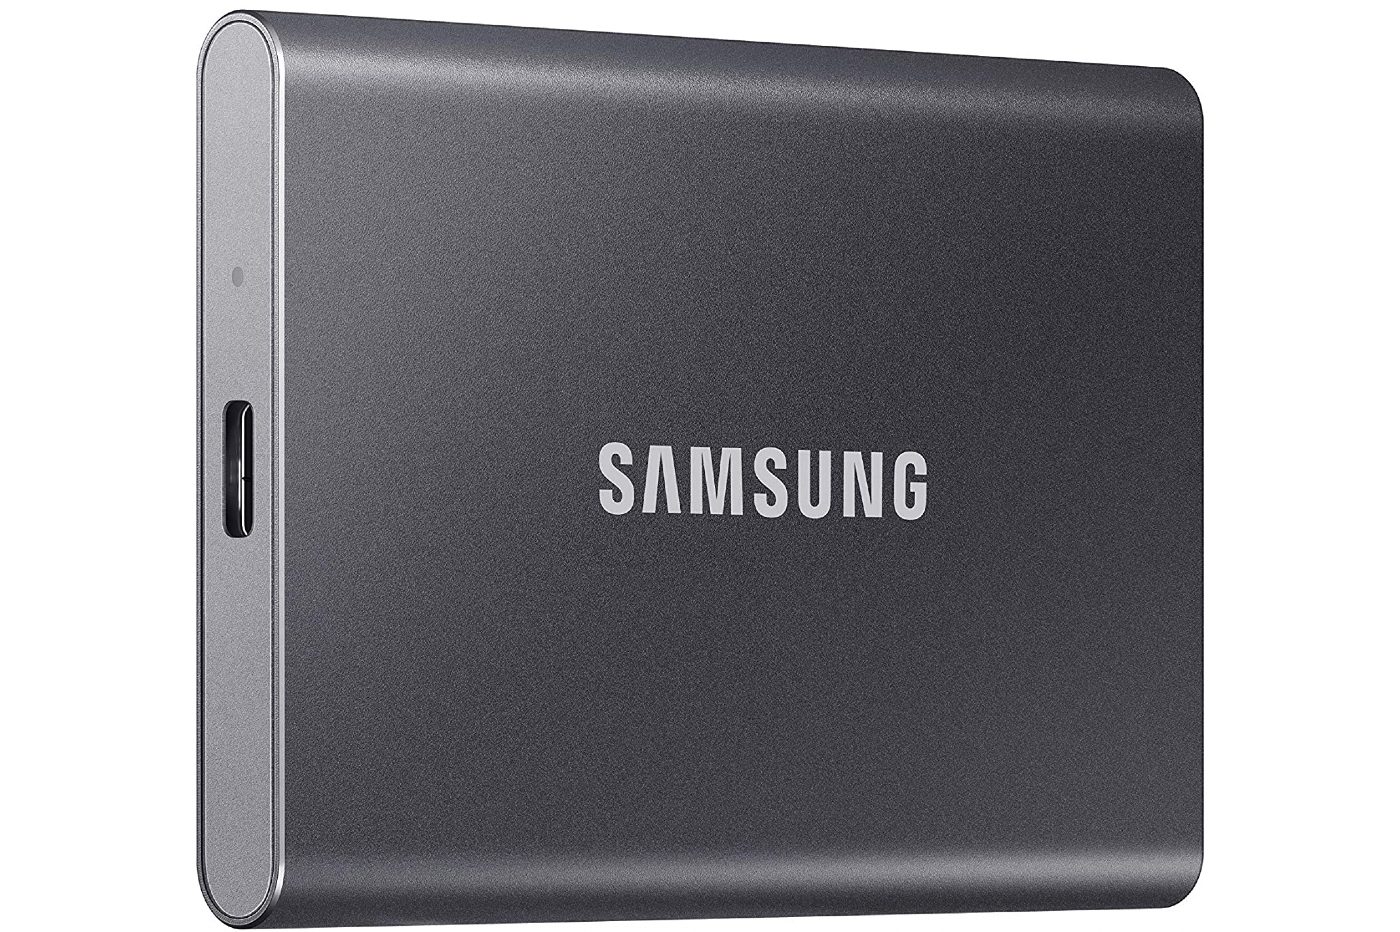 Samsung T7 SSD Promotion Amazon